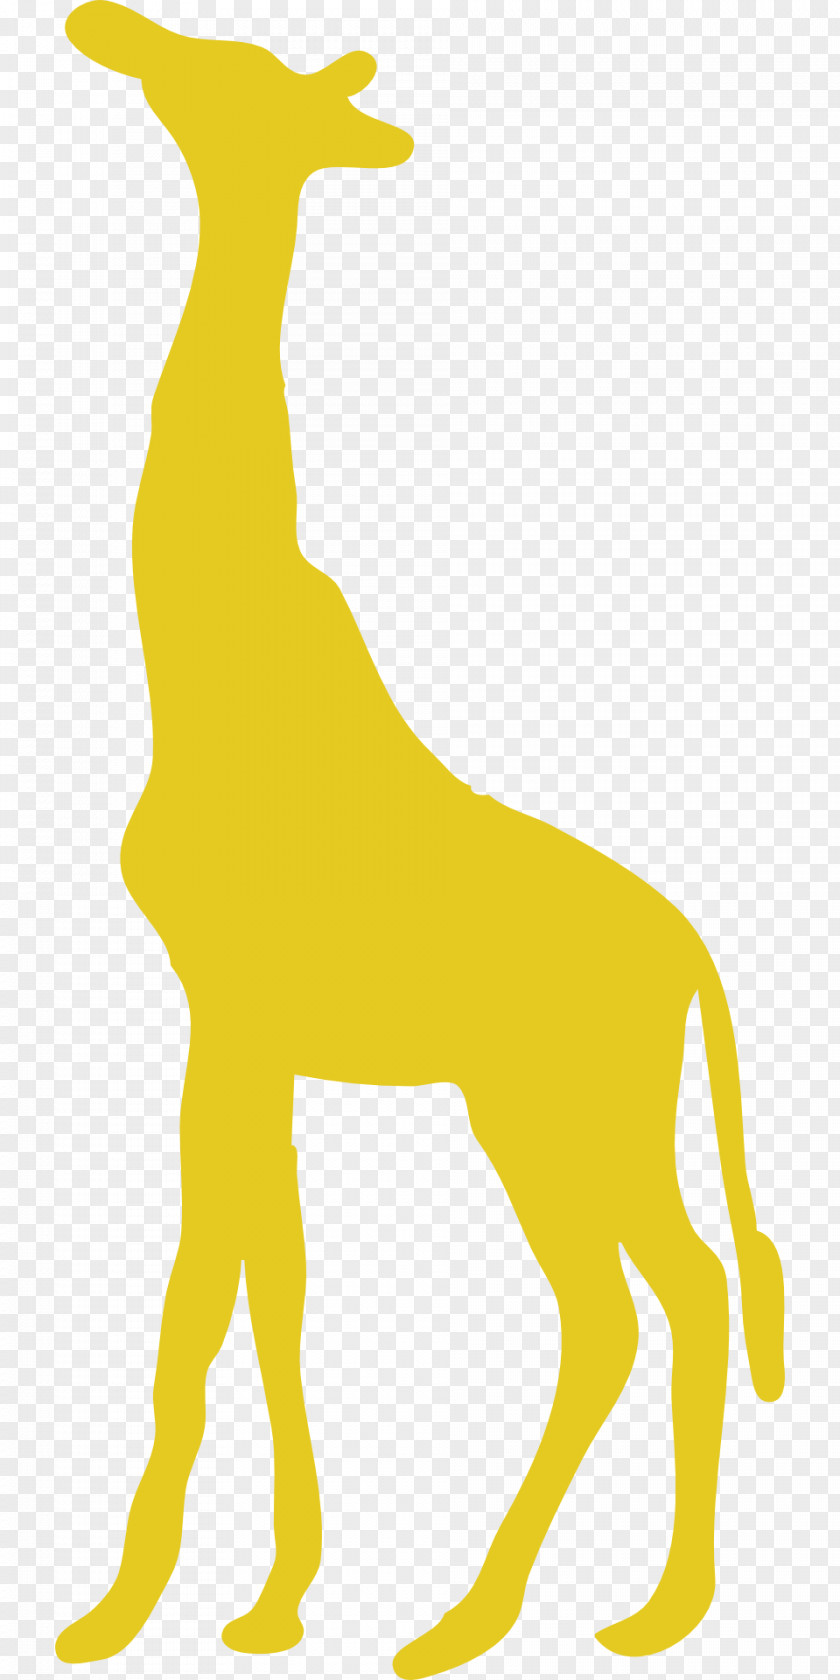 Giraffe West African Family Silhouette Clip Art PNG